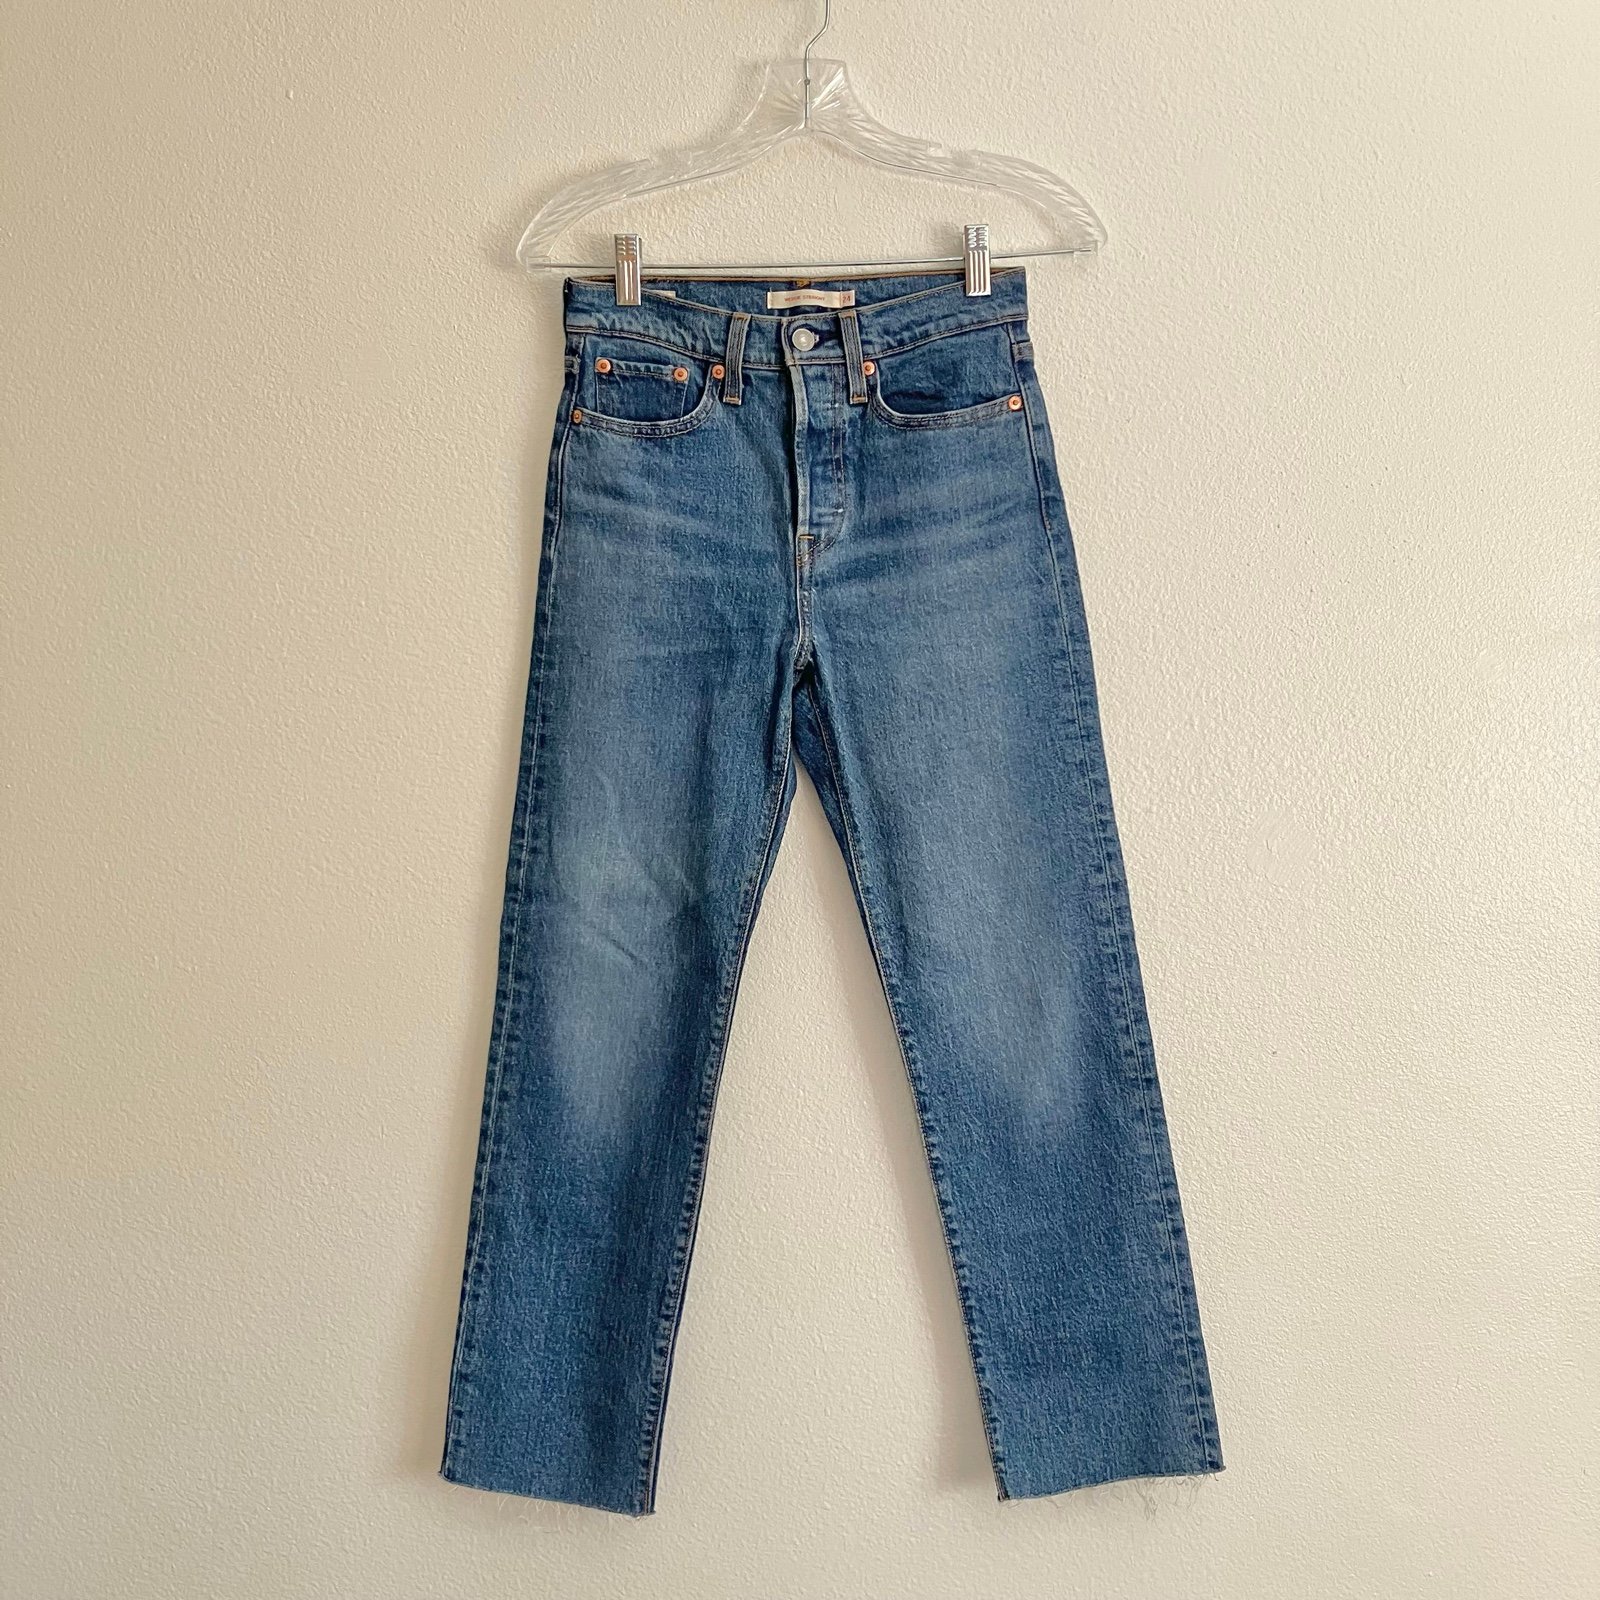 Exclusive Levi’s Wedgie Straight Medium Wash Denim Jean Pants Size 24 Mom Jean High Waist nZnbO1U2E Fashion